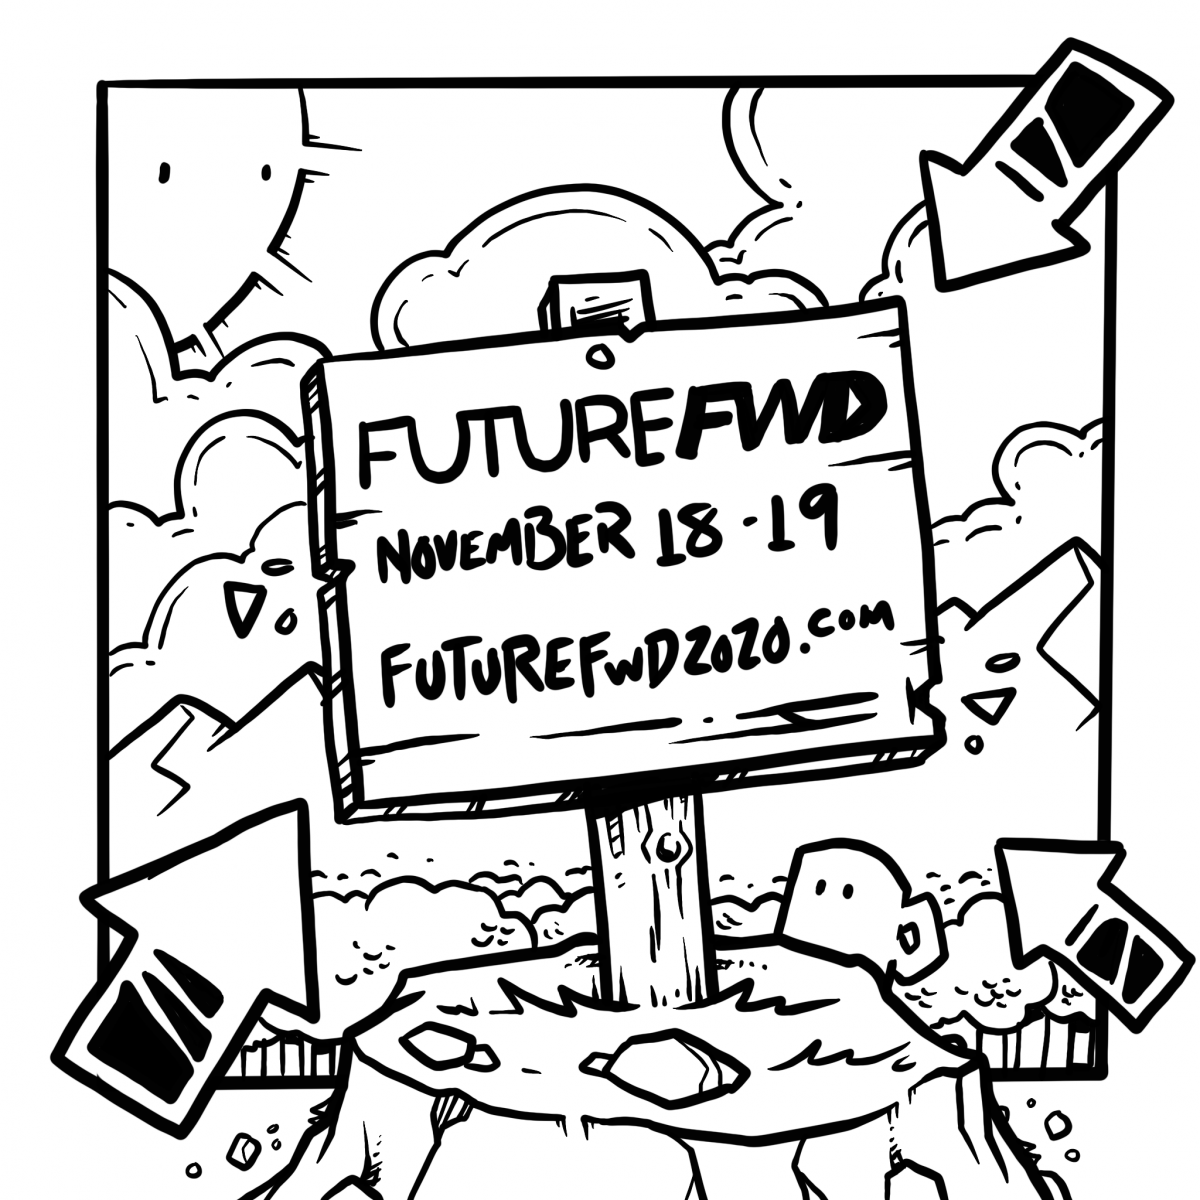 FutureFWD 2020